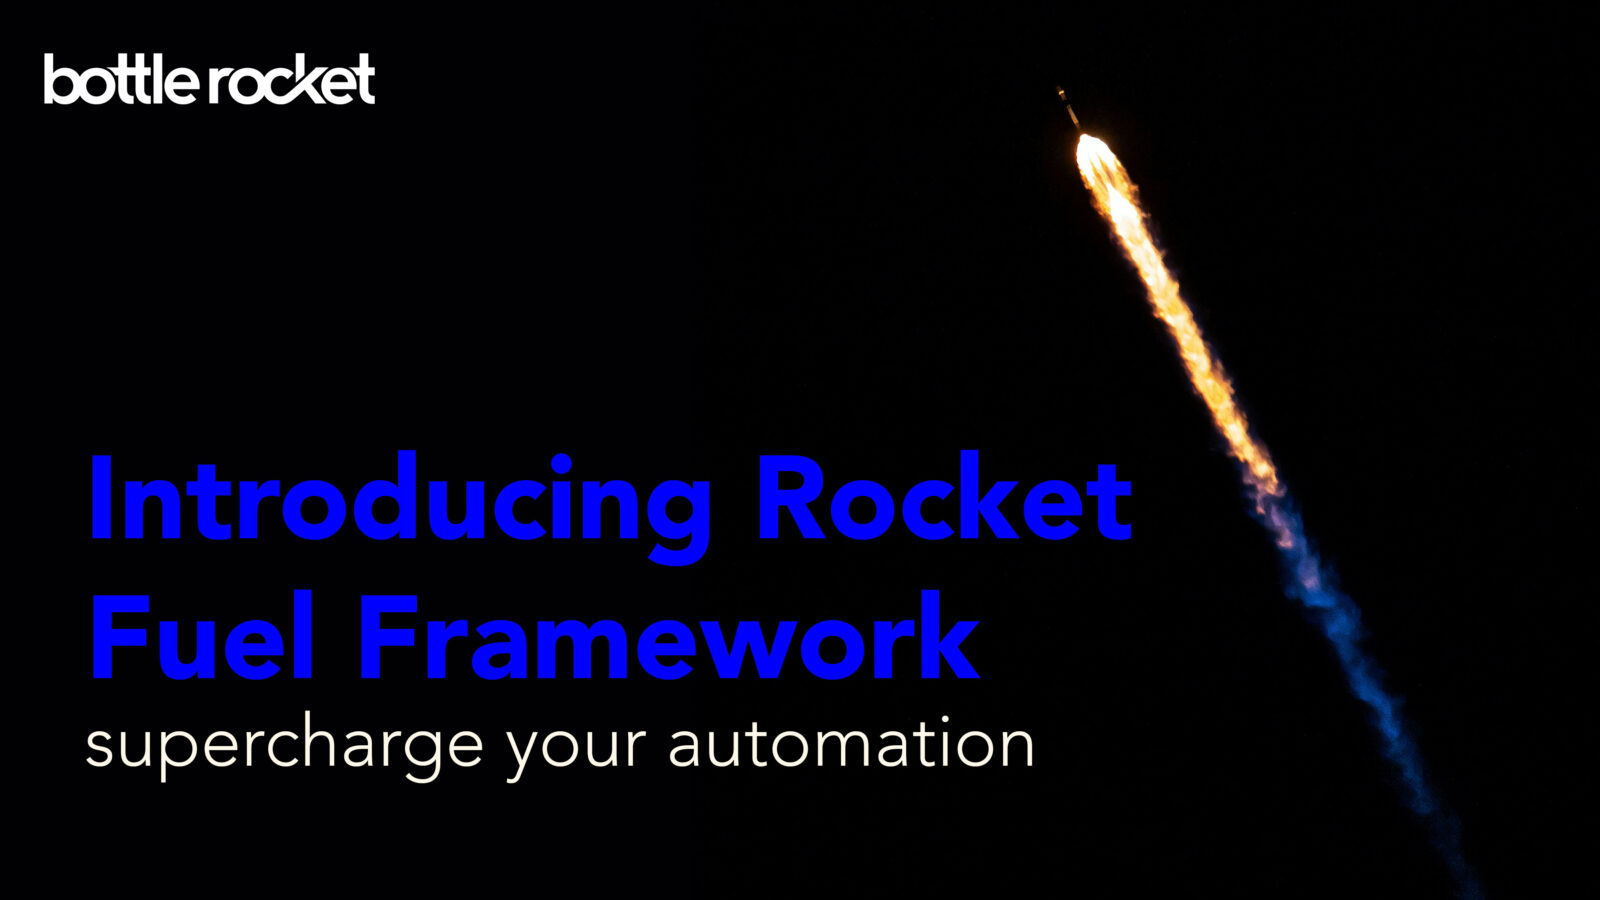 Image of a rocket with "Introducing Rocket Fuel Frameworksupercharge your automation"